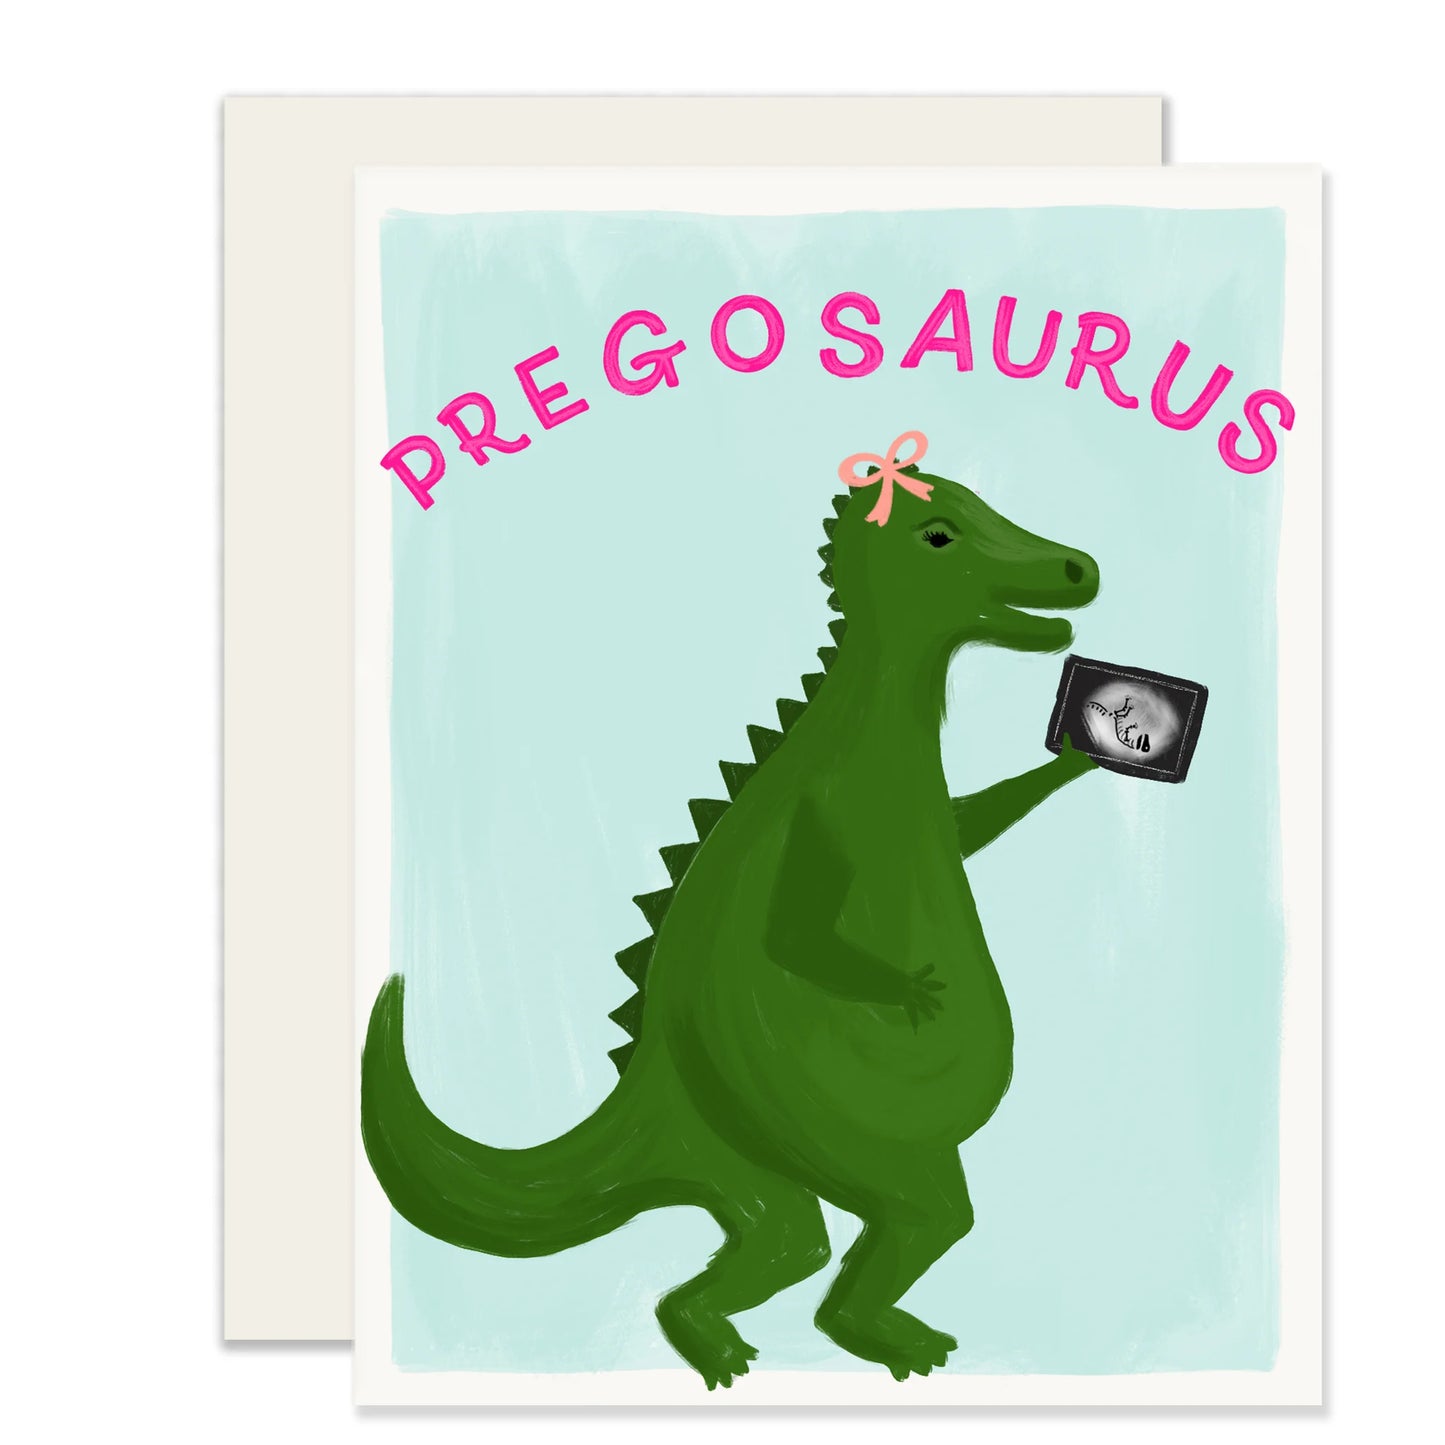 PREGOSAURUS GREETING CARD